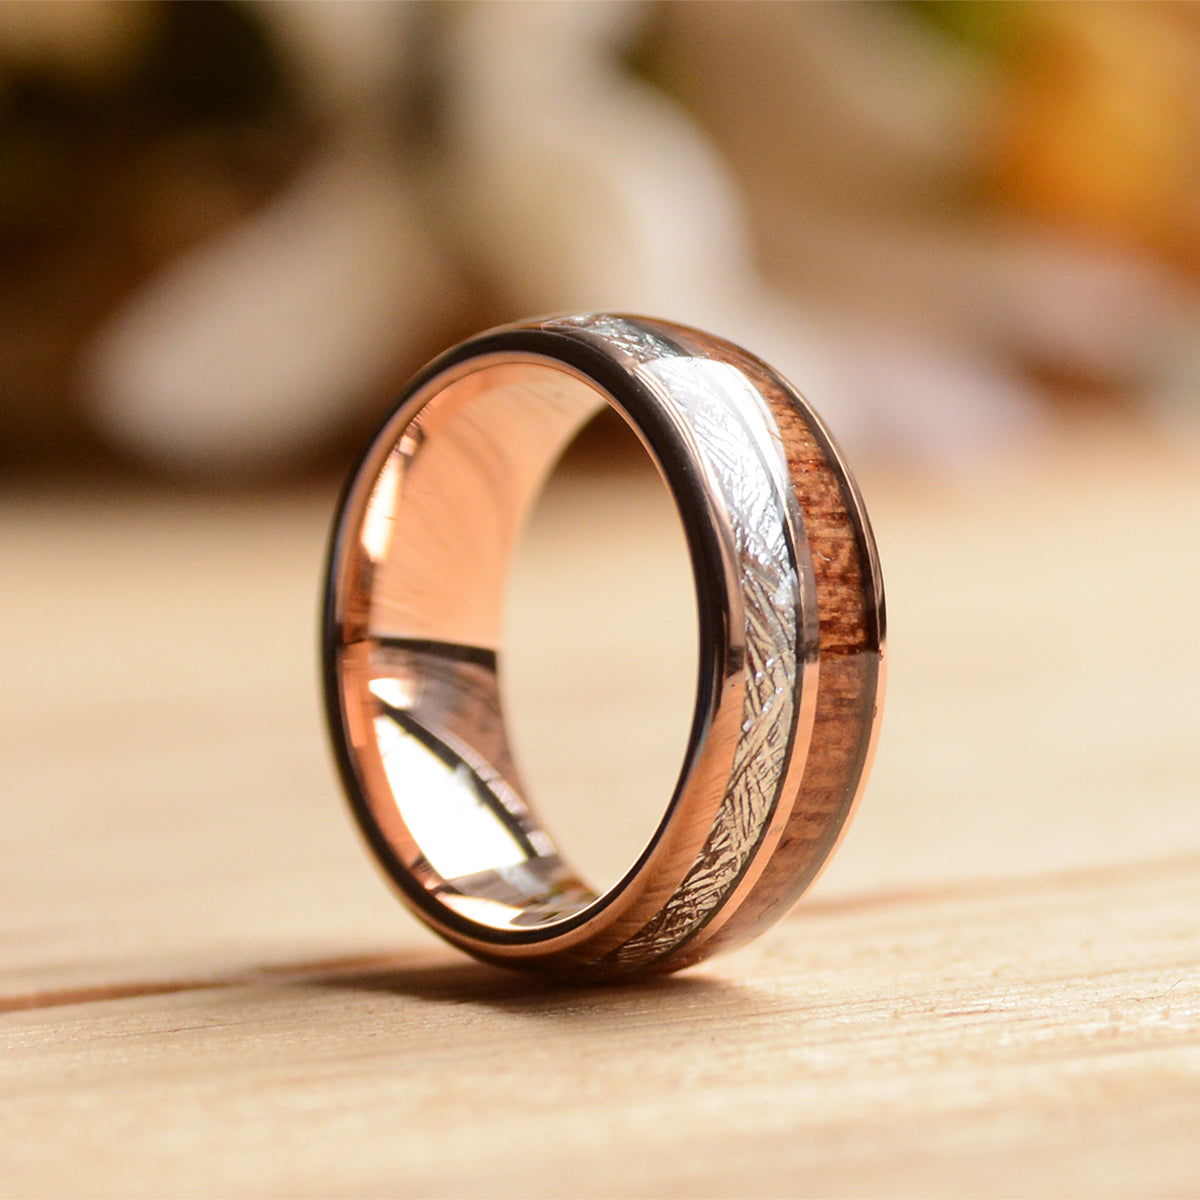 Wood Wedding Band: Urban Designer Rose Gold Tungsten Ring With Meteorite And Wood Wedding Ring